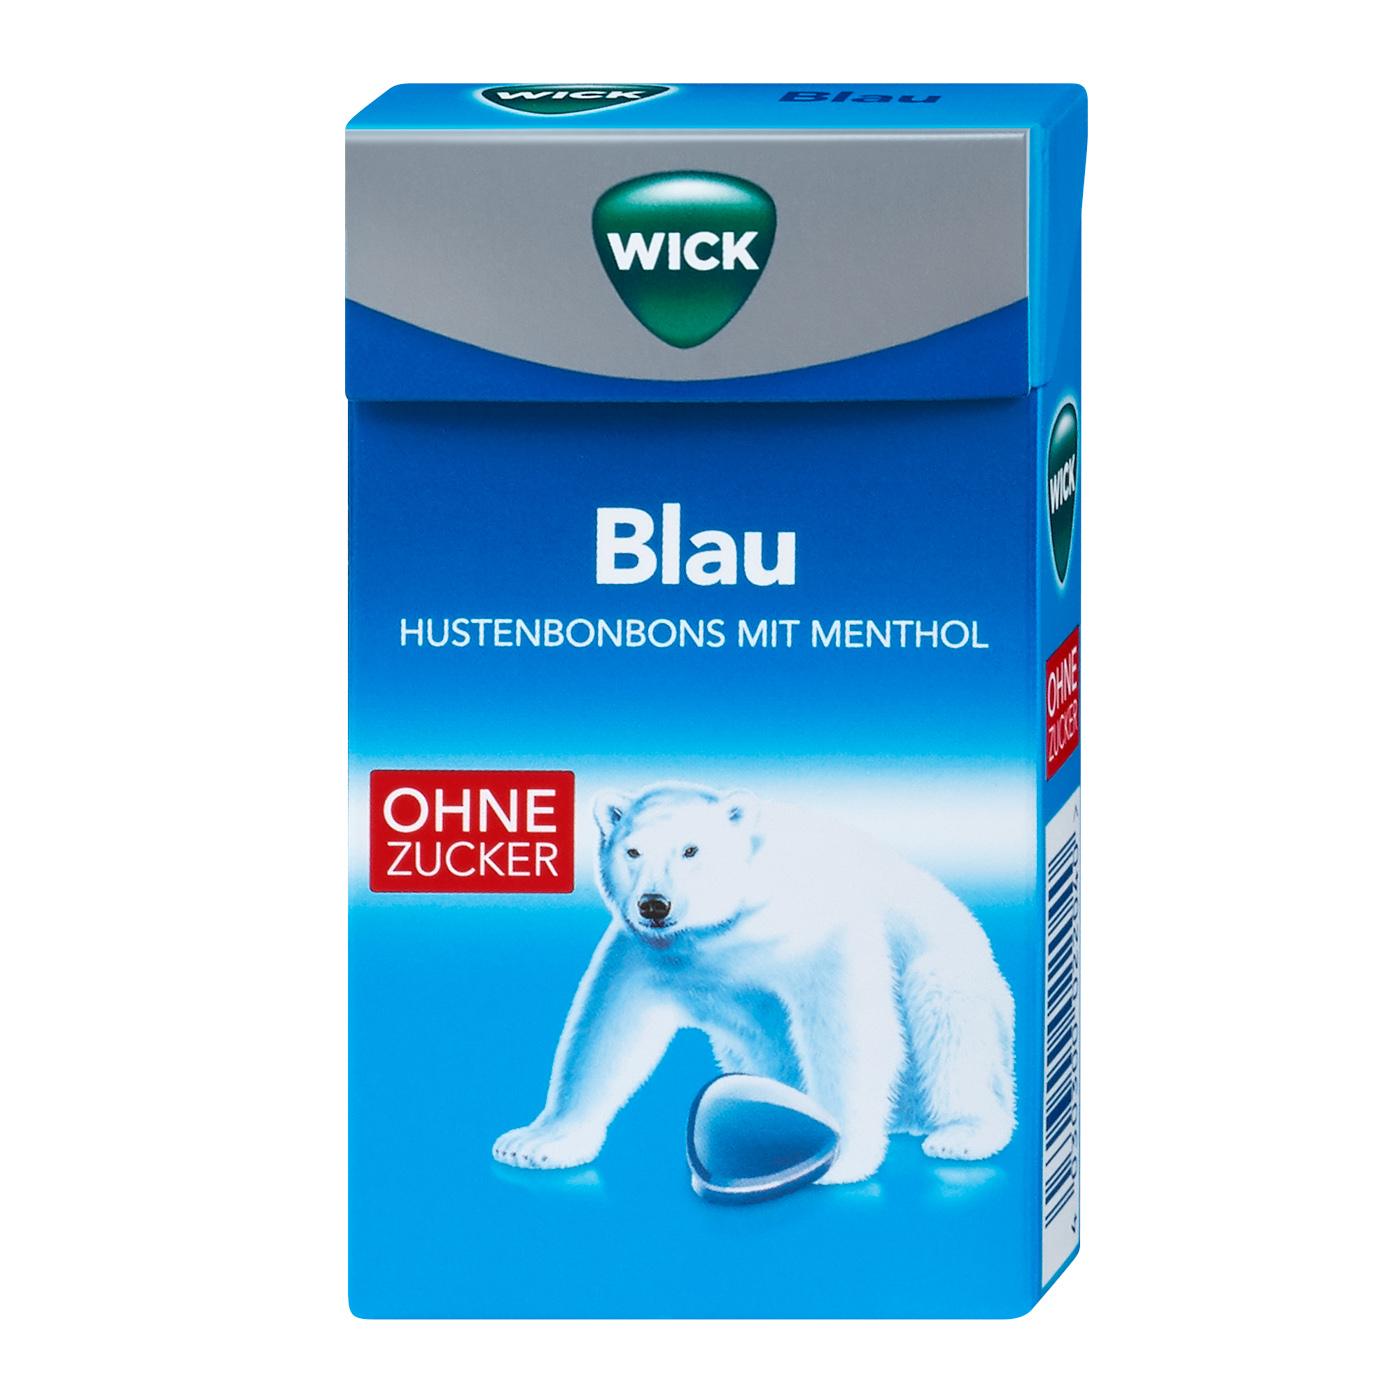 Wick Blau Menthol ohne Zucker 46G